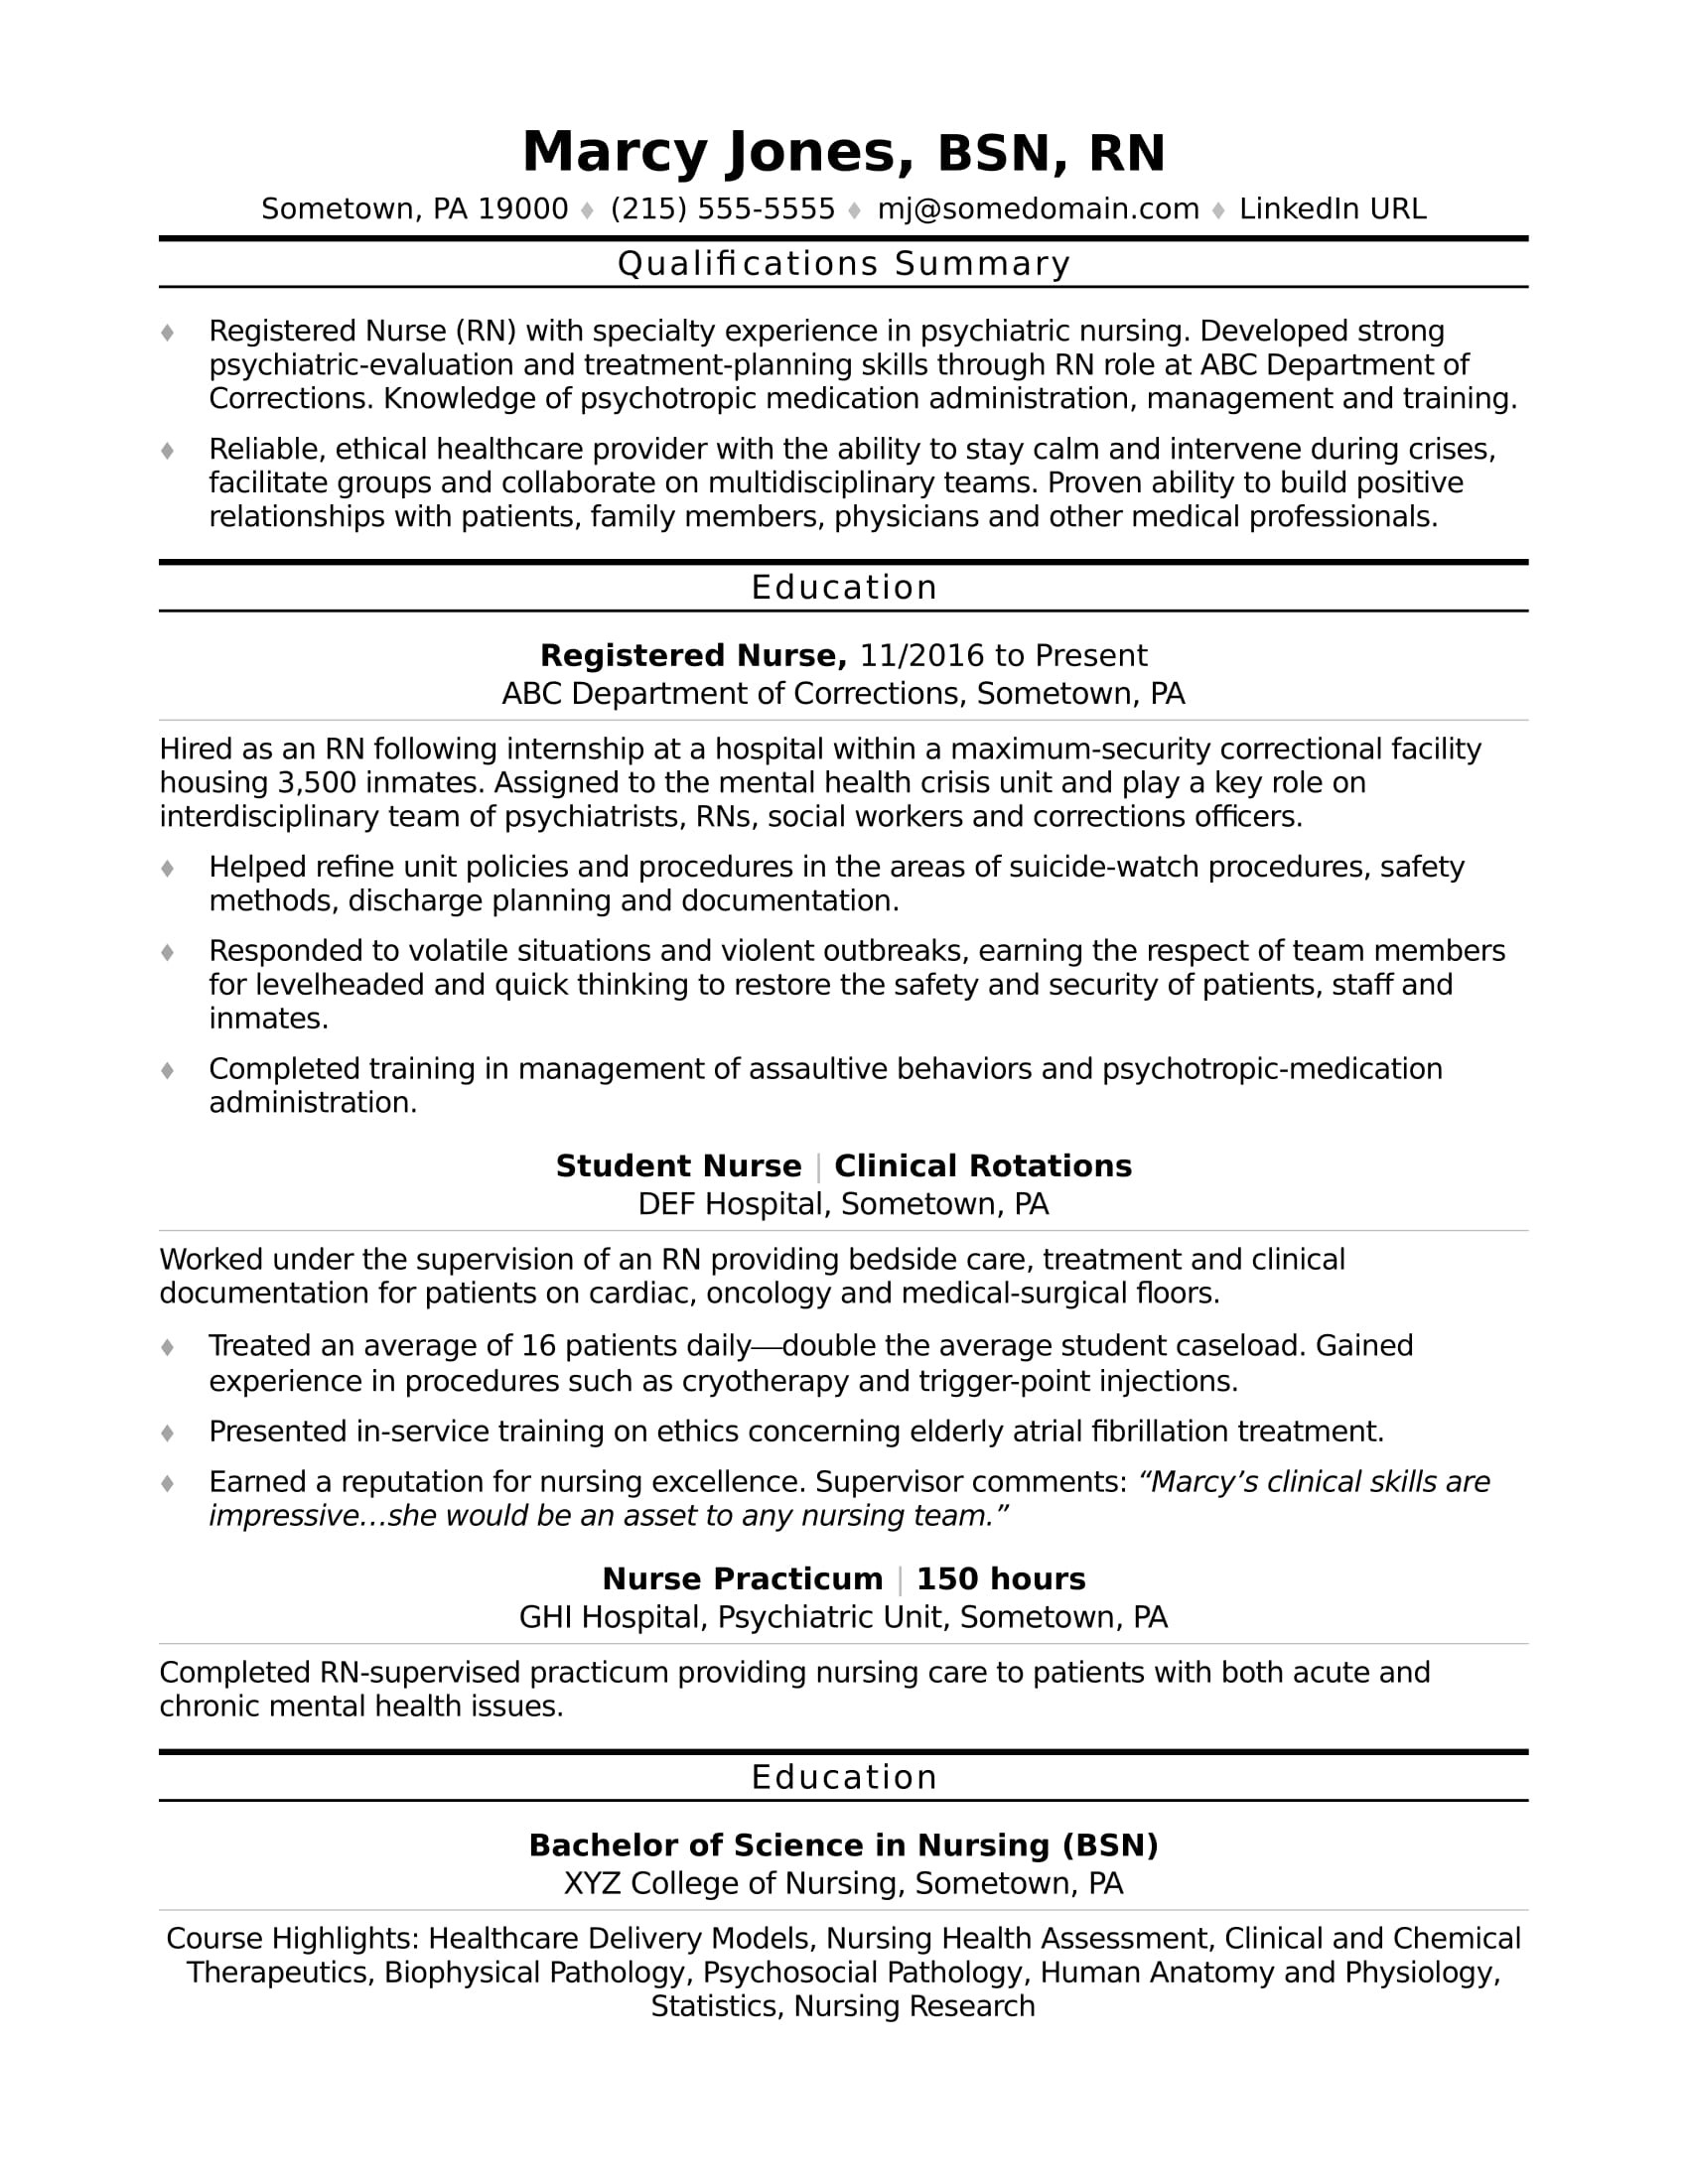 Registered Nurse Job Description Resume Sample Entry-level Nurse Resume Monster.com